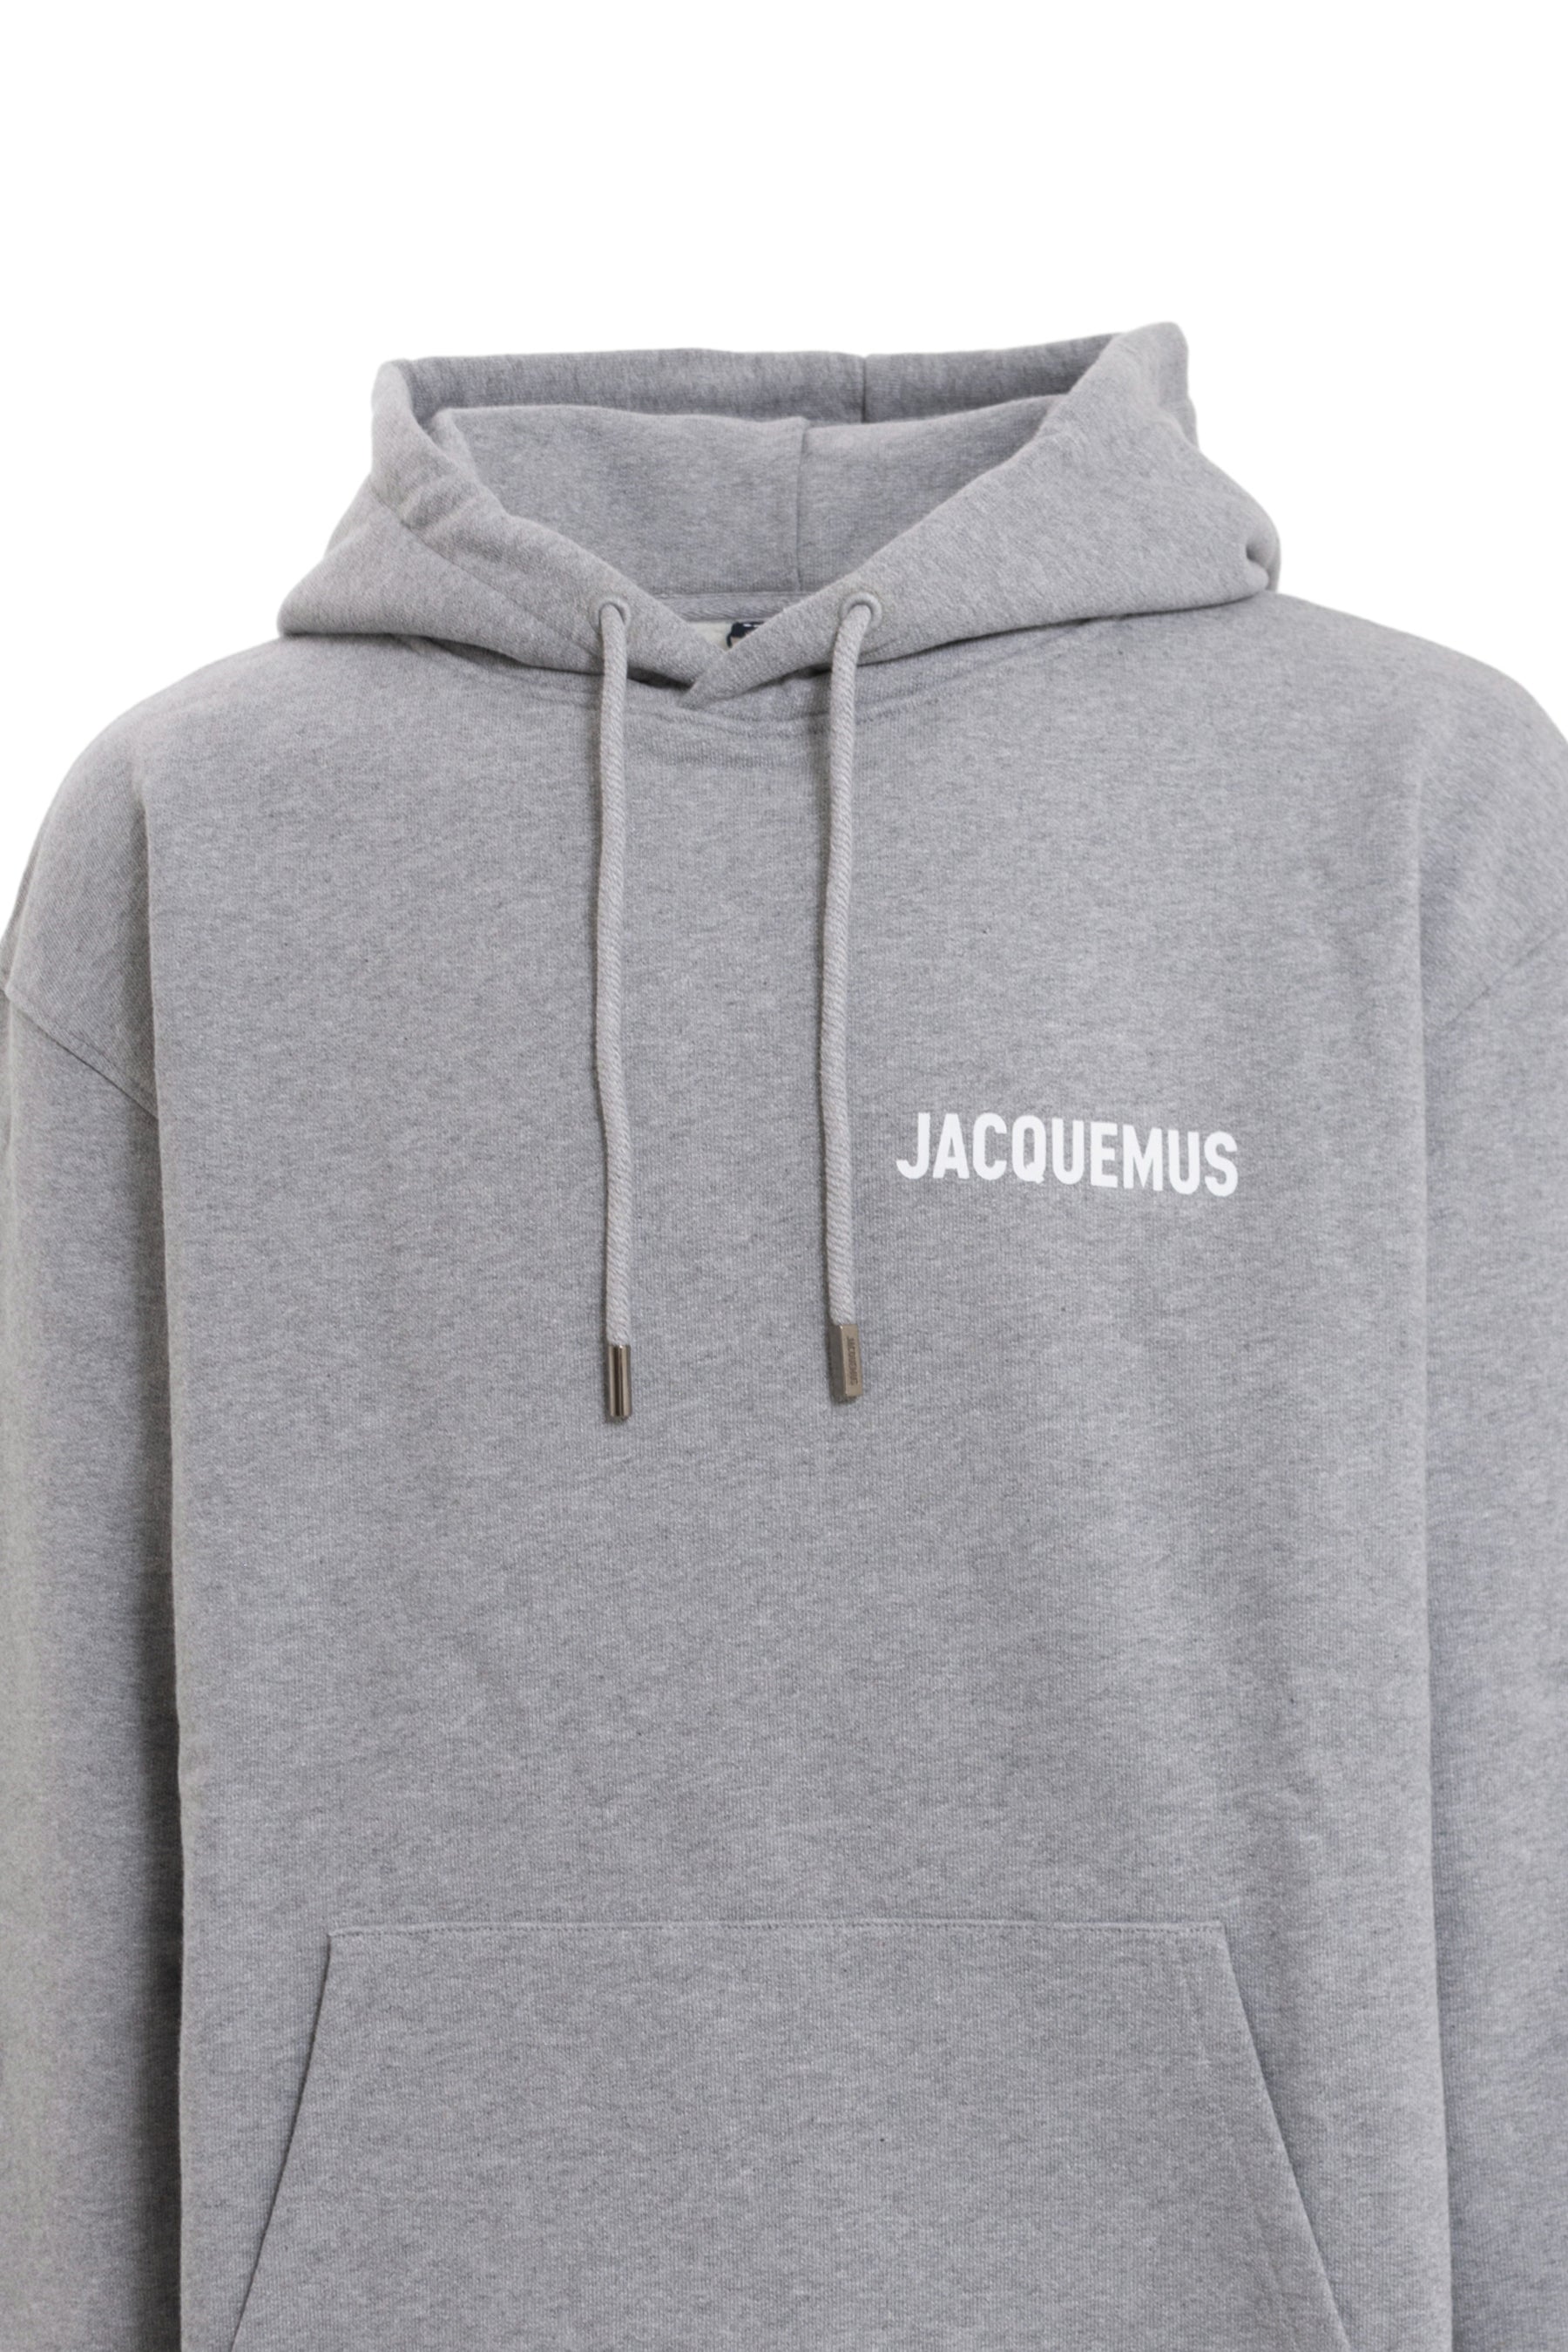 Jacquemus Gray Forever 'Le Sweatshirt Jacquemus' Hoodie